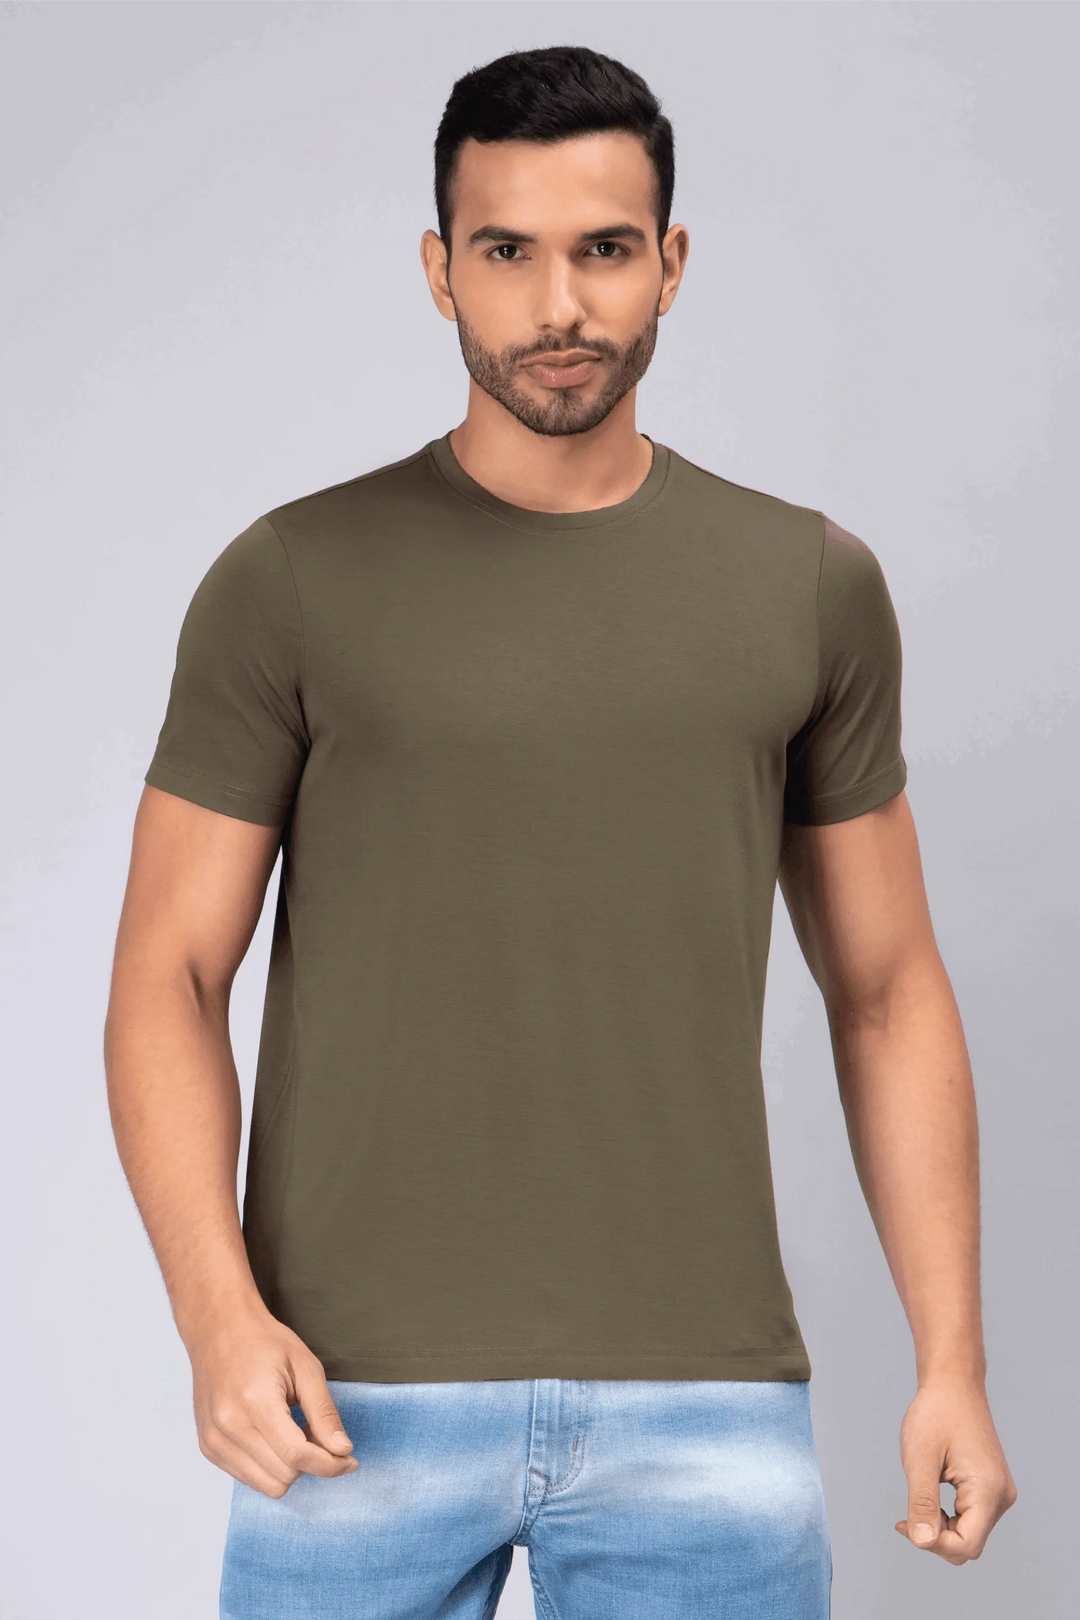 Men's Half-Sleeve Solid Cotton T-shirt - Peplos Jeans 